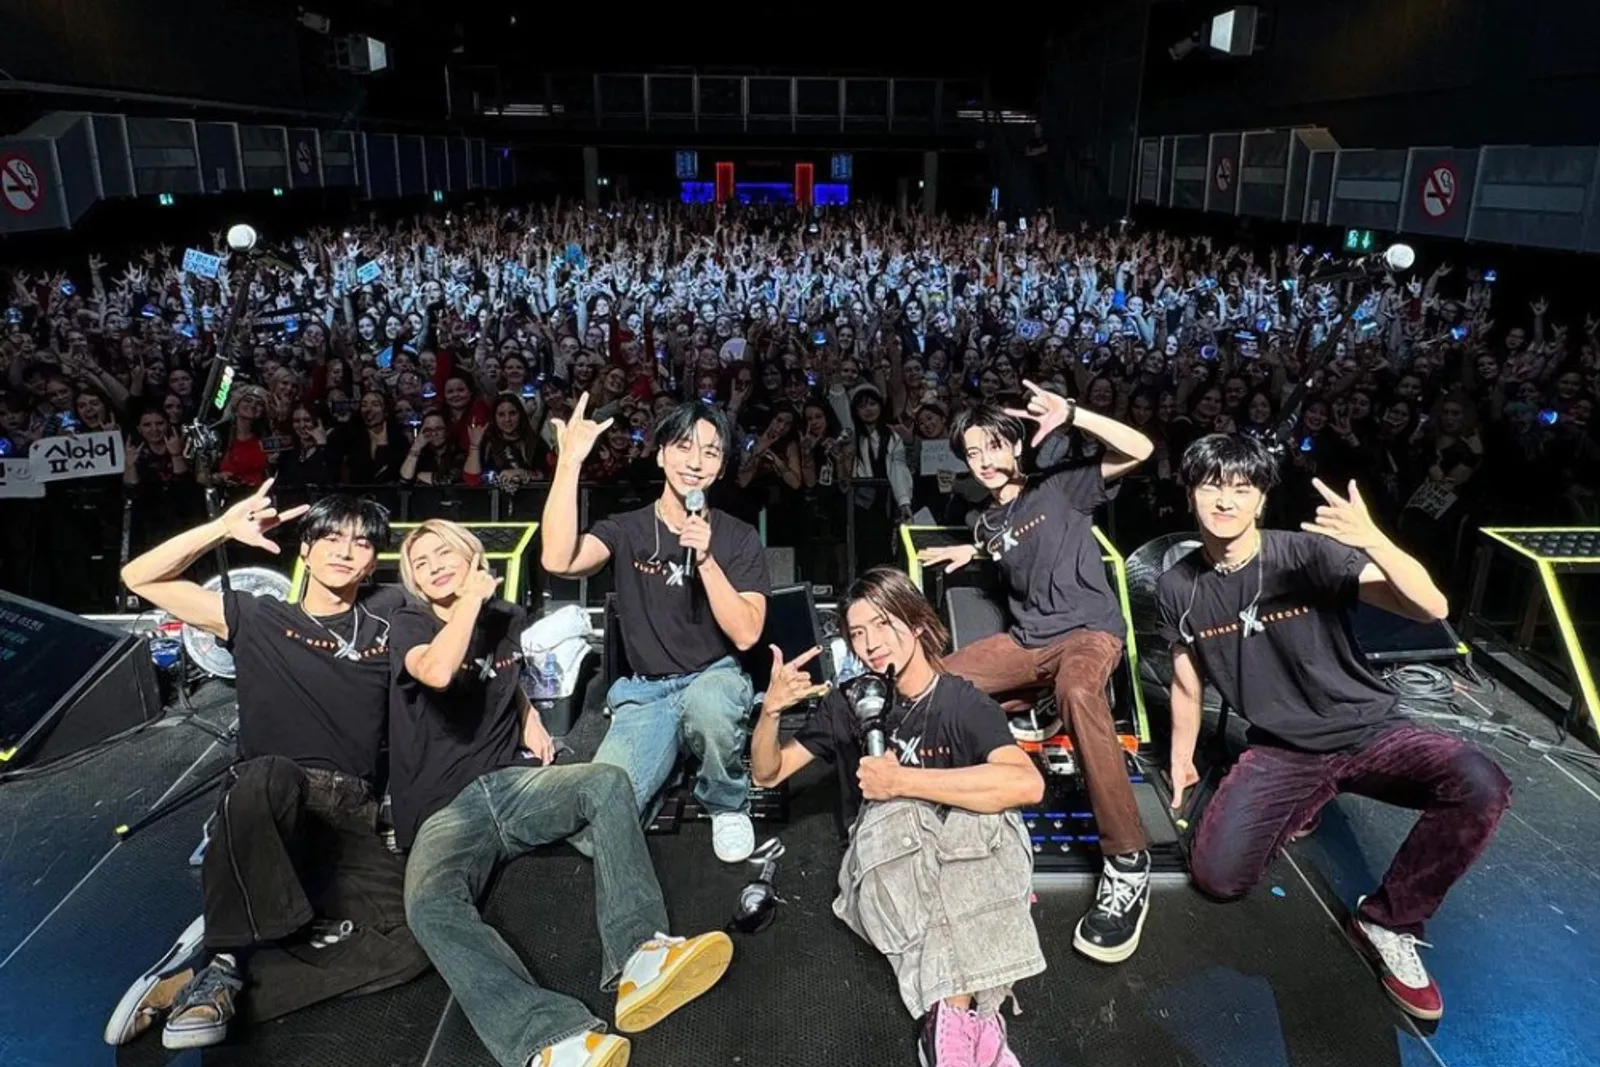 Xdinary Heroes Konser Break The Brake Jakarta, Promosi EP 'Livelock'